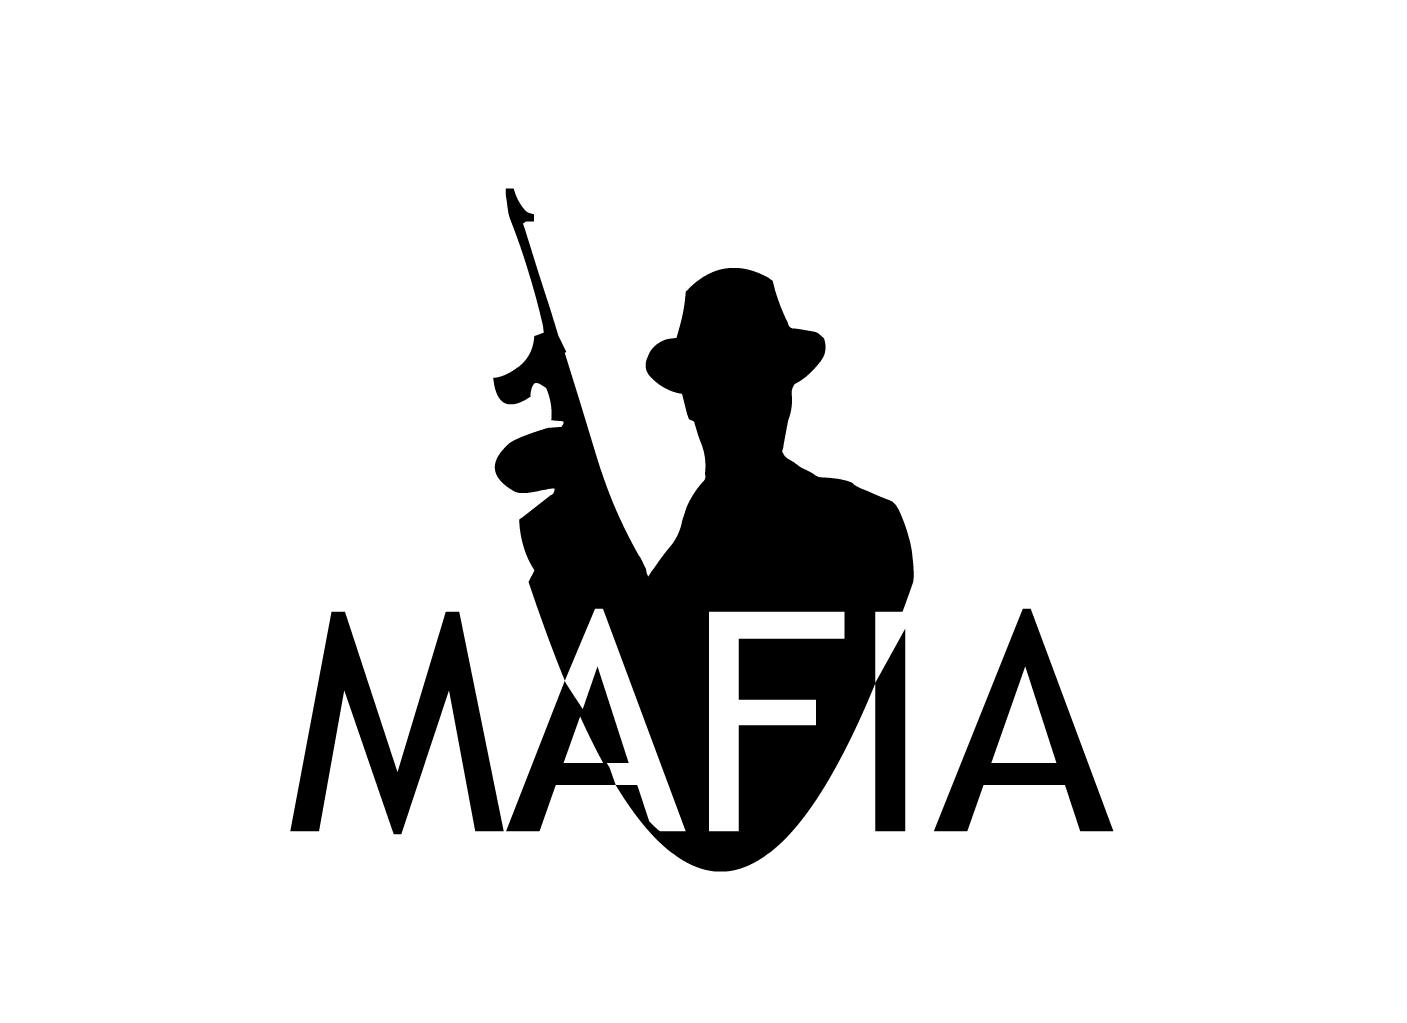 Mafia__The_Wallpaper_by_Ka0z.jpg